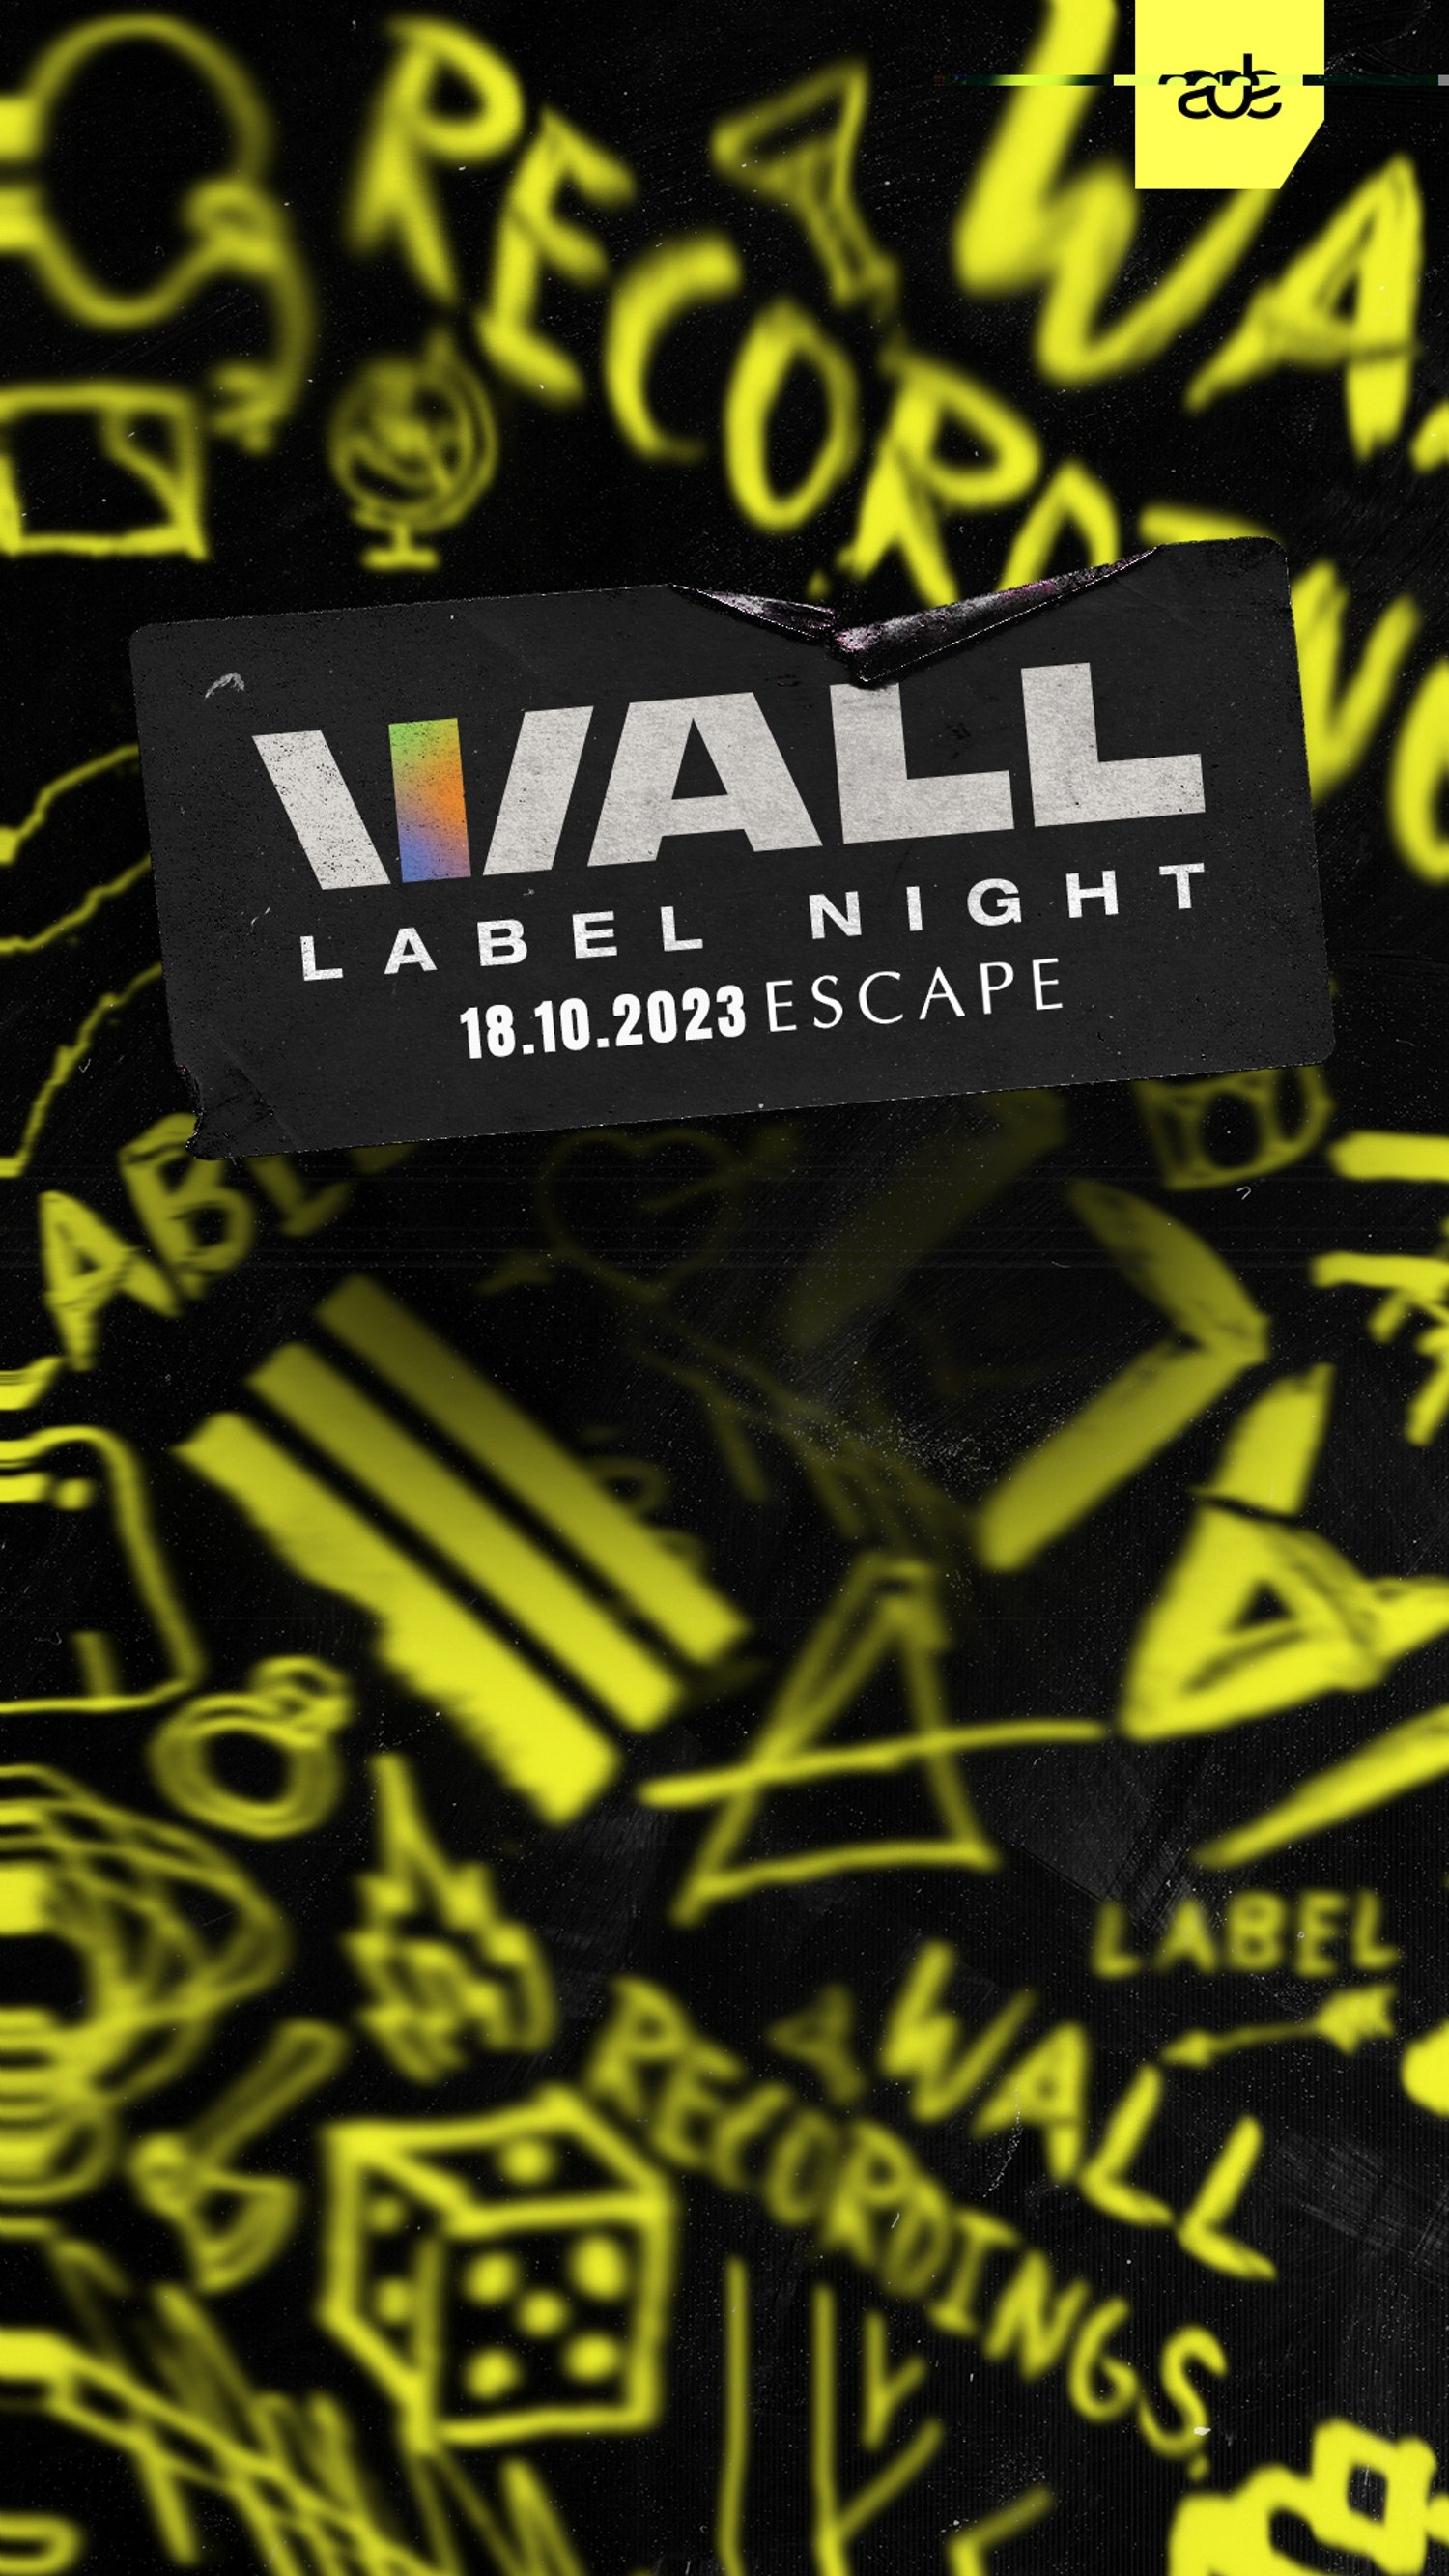 ADE Wall Label Night